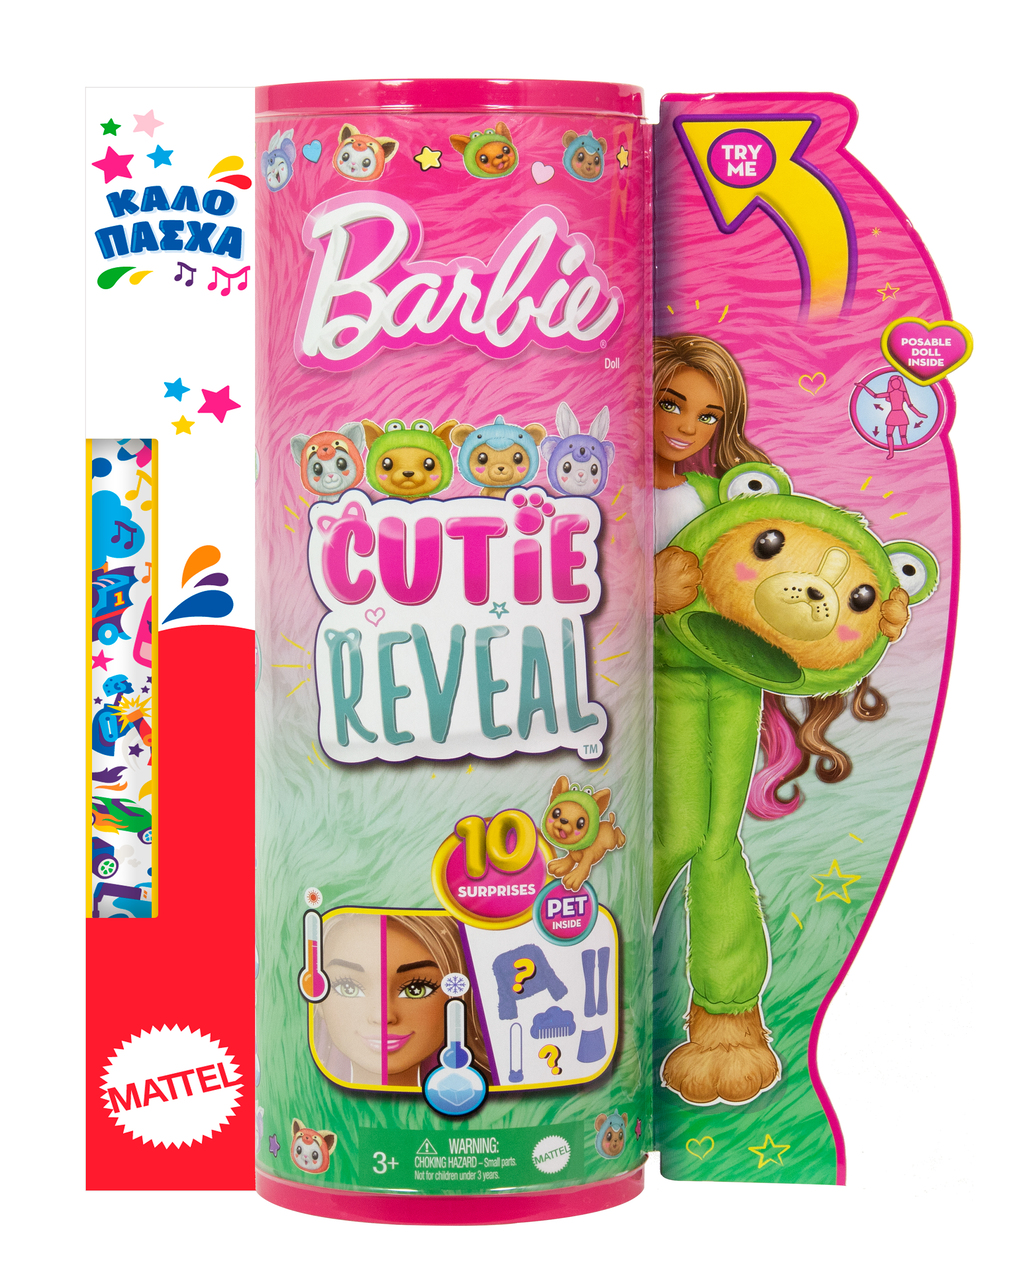 Barbie λαμπάδα cutie reveal κούκλα και αξεσουάρ με 10 εκπλήξεις hrk24